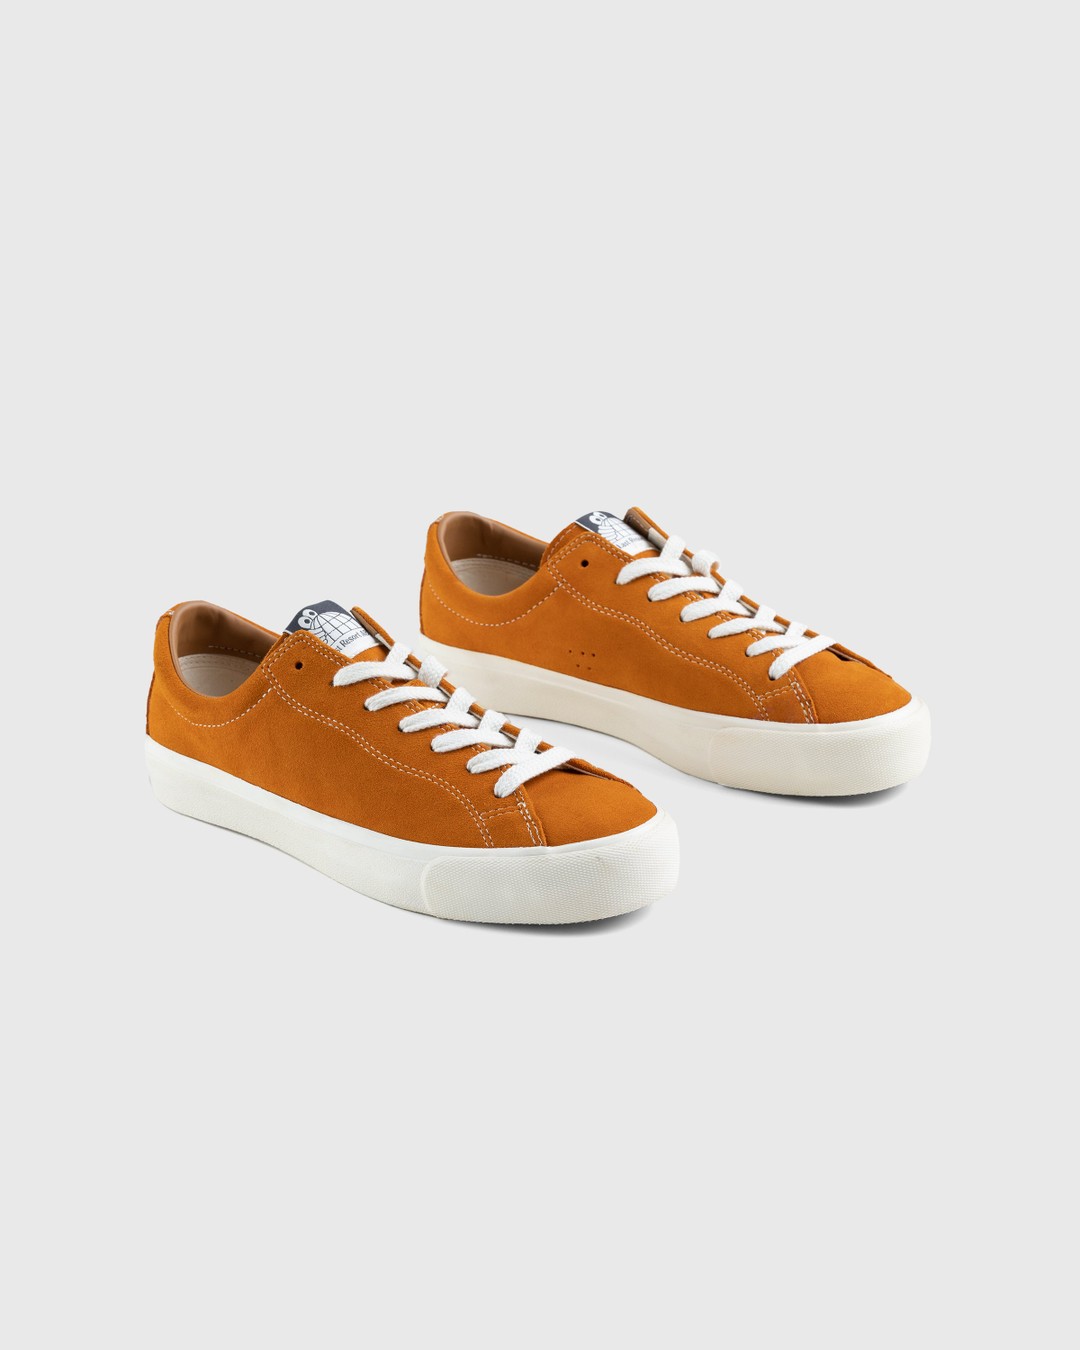 Last Resort AB – VM003 Suede Lo Cheddar/White - Low Top Sneakers - Orange - Image 4